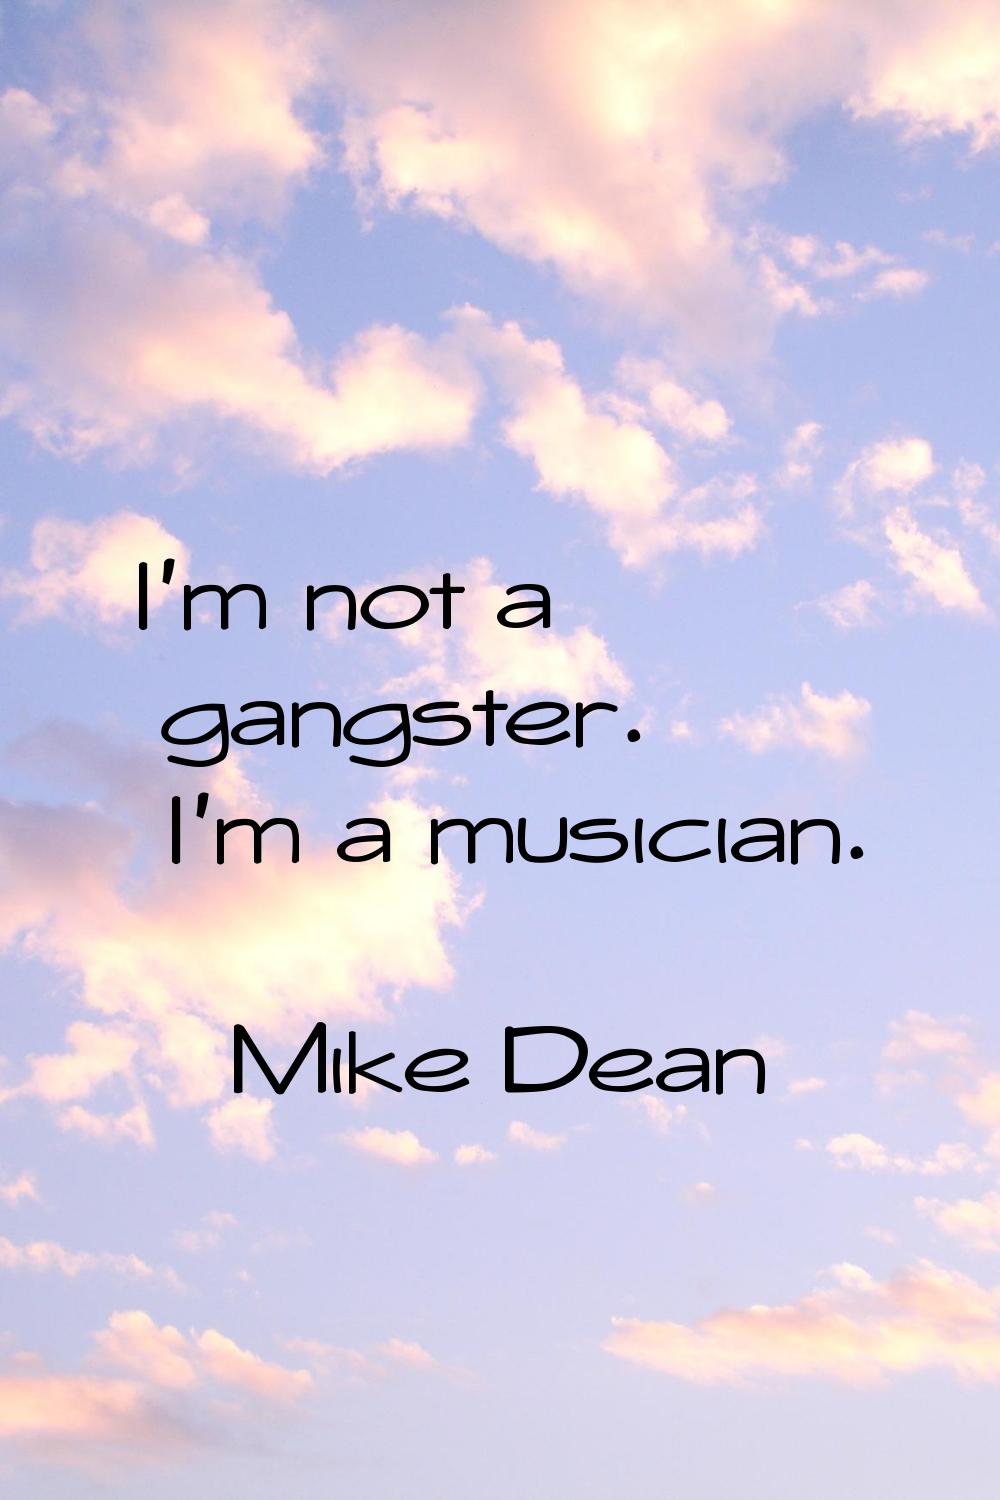 I'm not a gangster. I'm a musician.